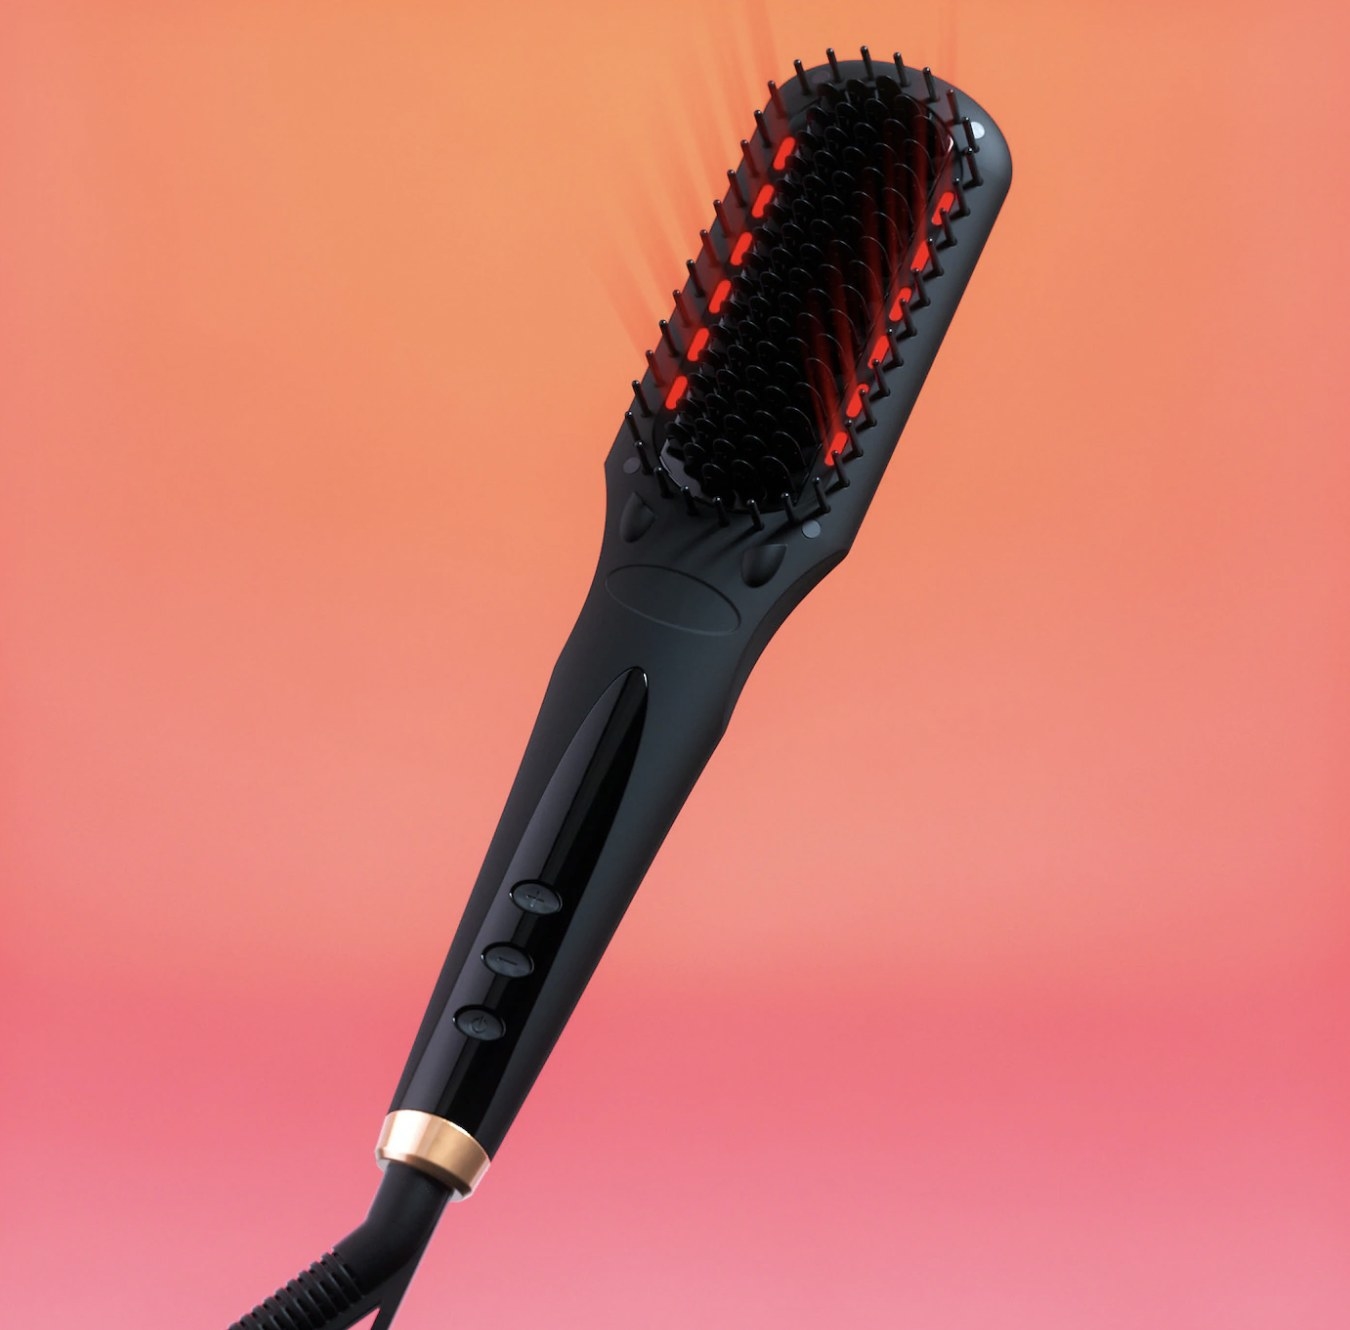 A thermal straightening hairbrush